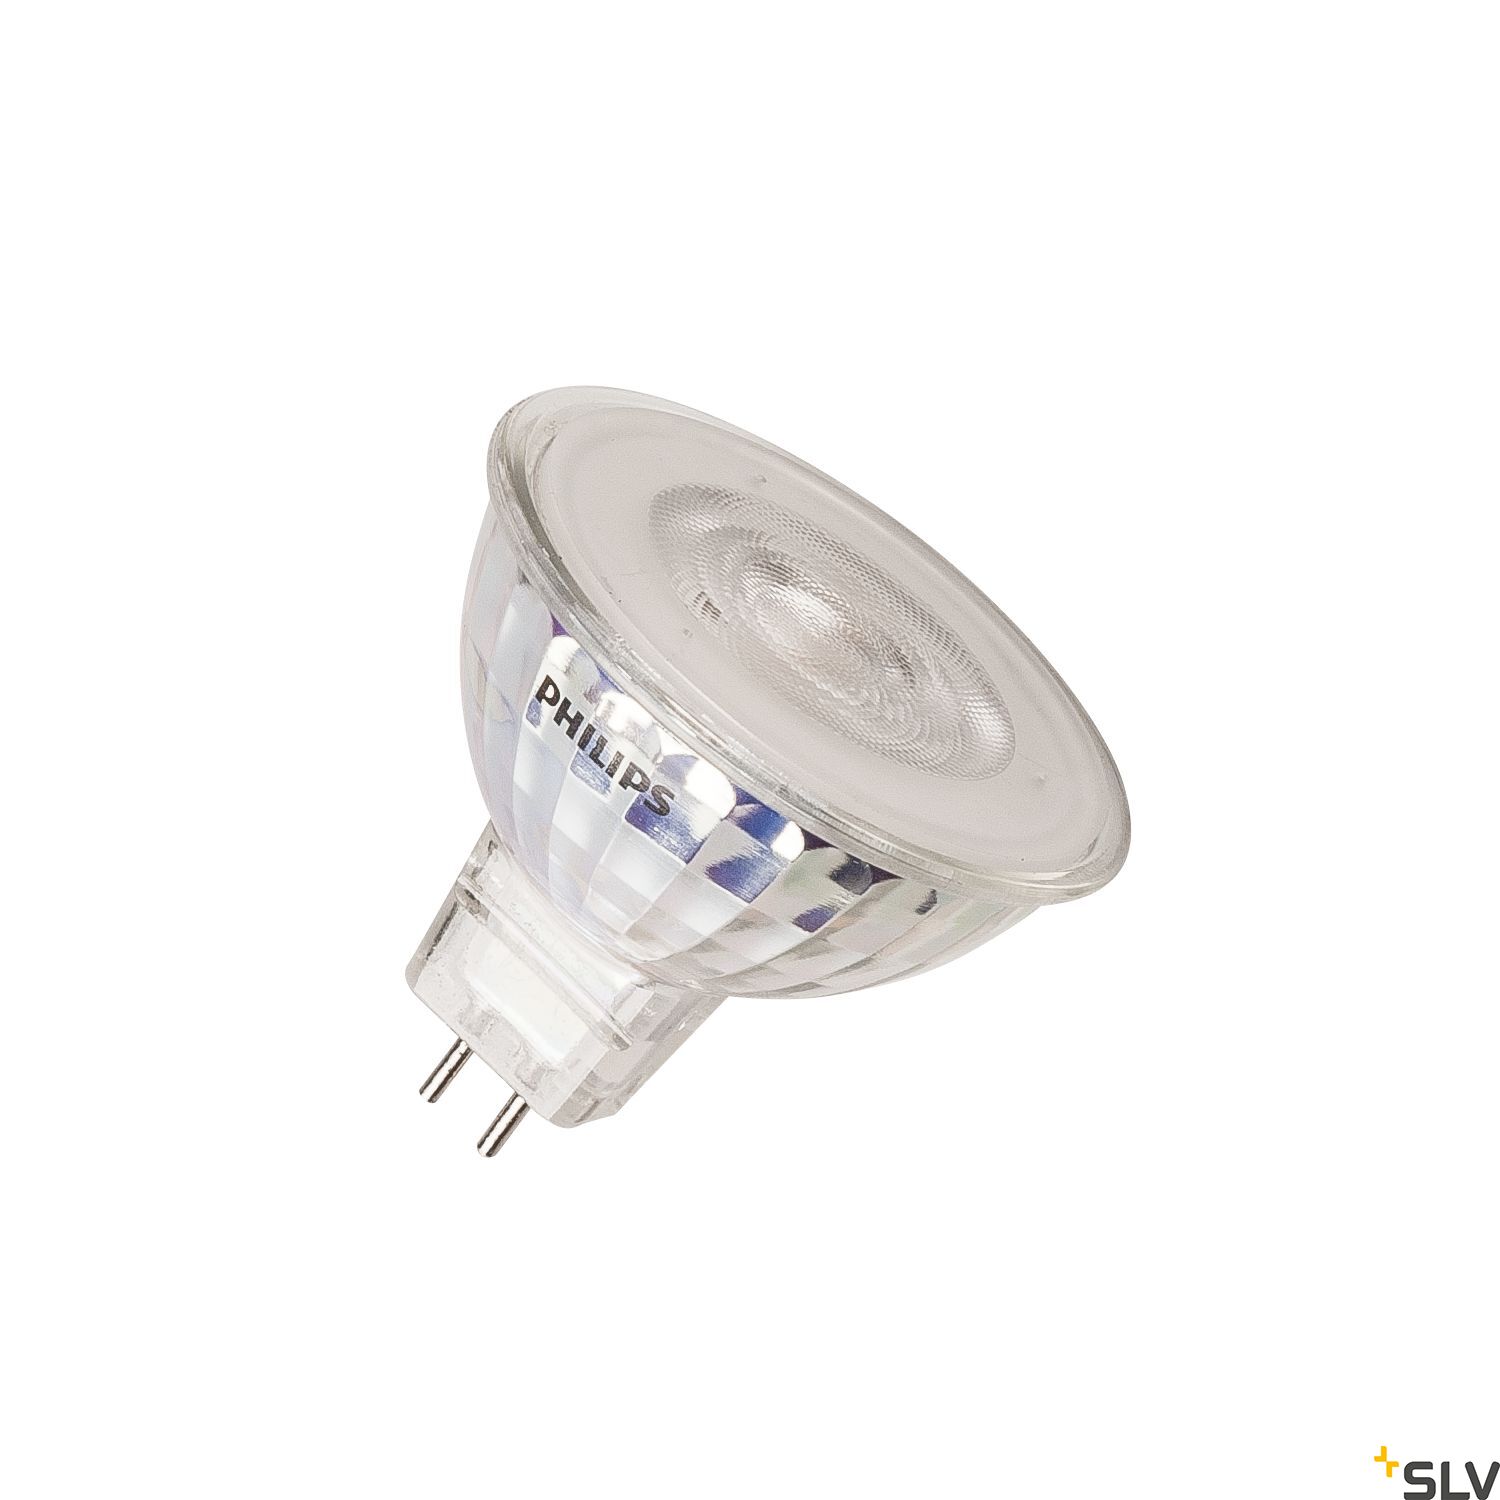 Philips Master LED Spot żarówka 12V AC GU5,3 5.8W 450lm 2700K 1001574 1001574